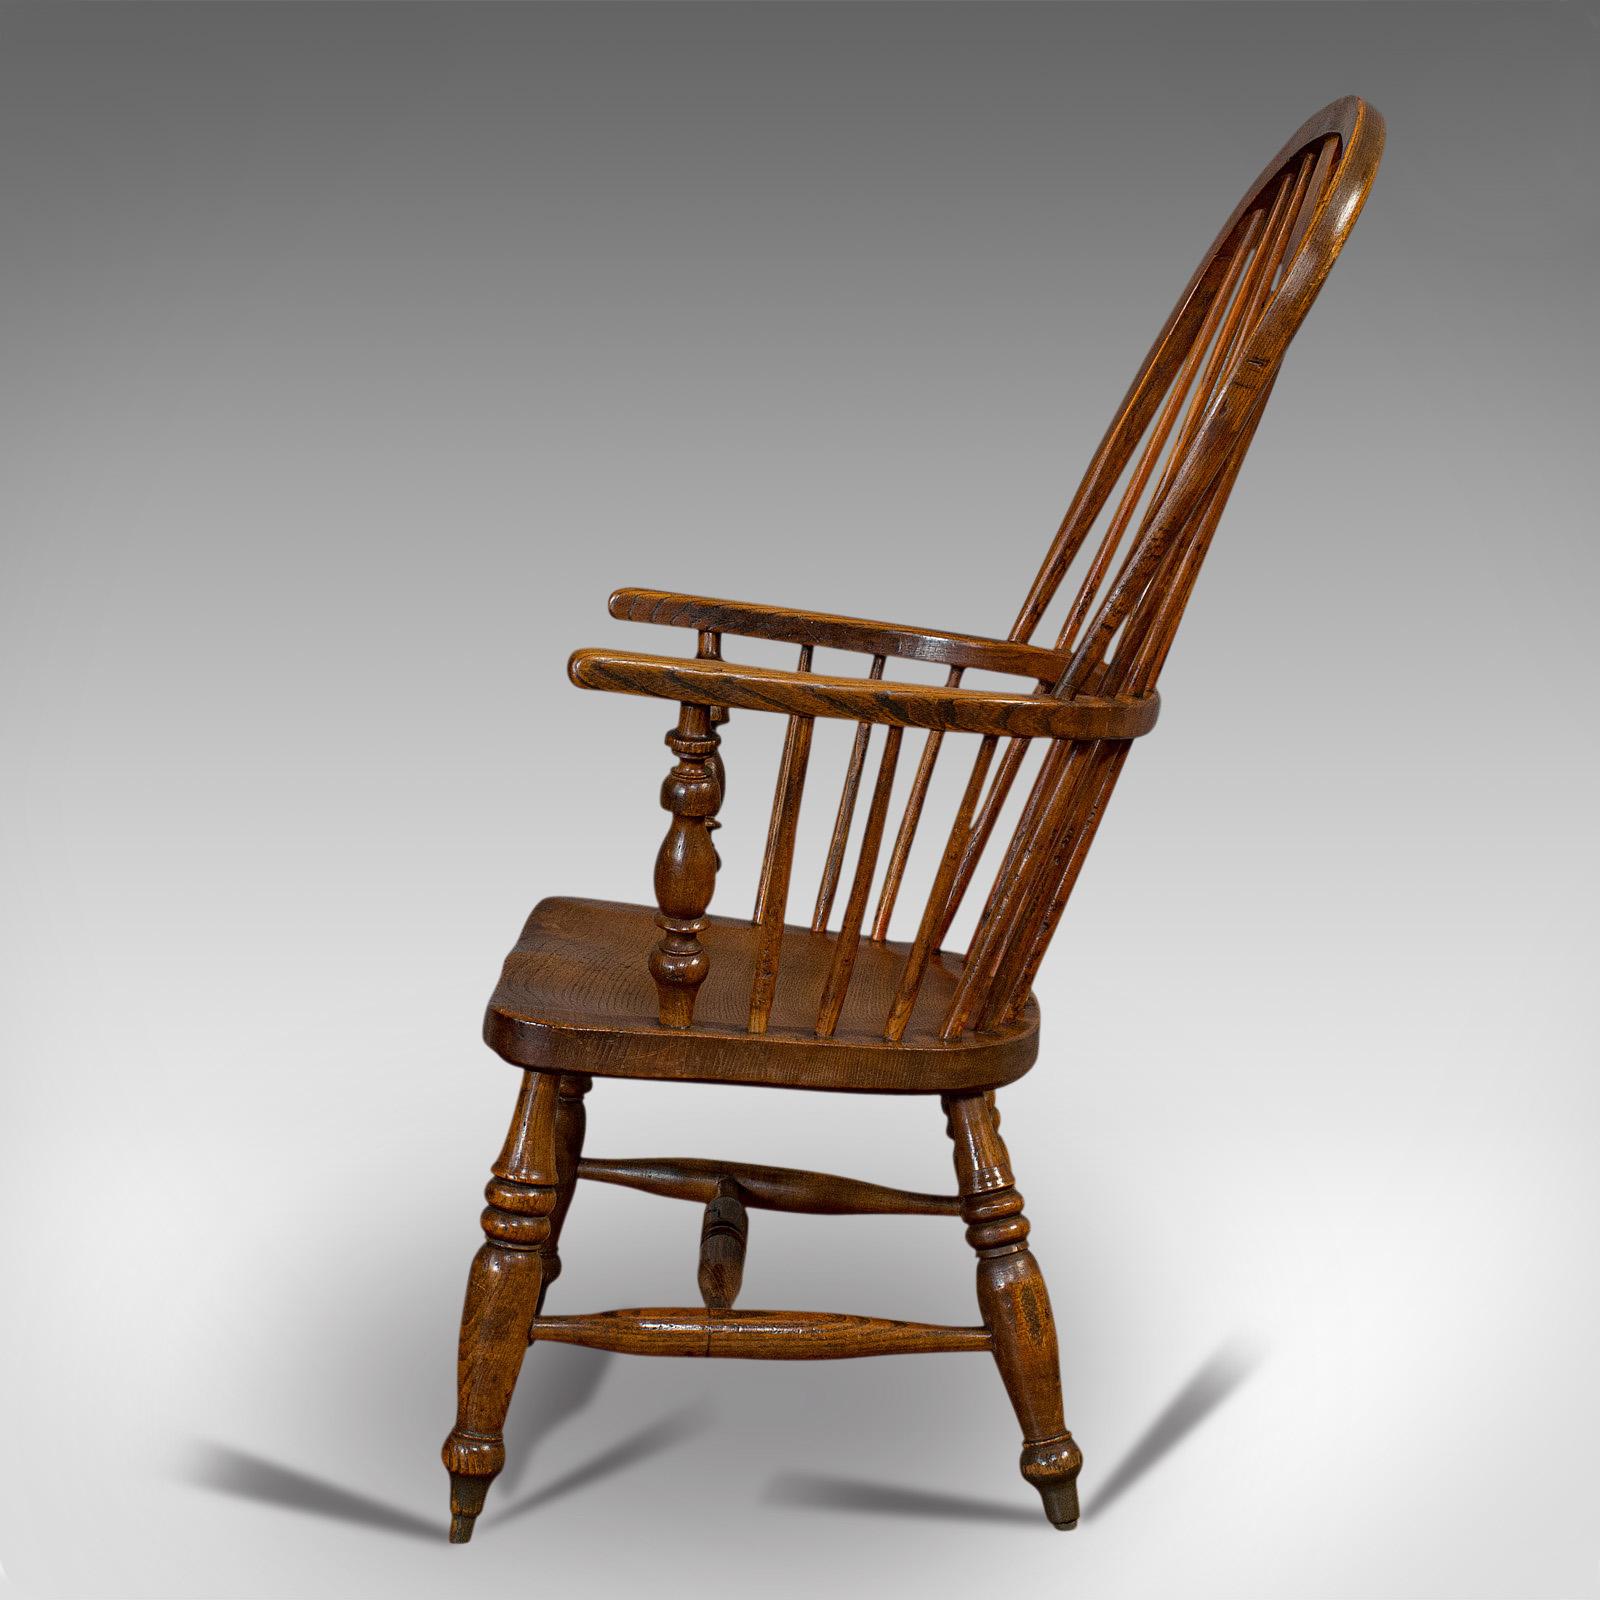 English Antique Windsor Chair, British, Elm, Ash, Elbow, Armchair, Victorian, circa 1860